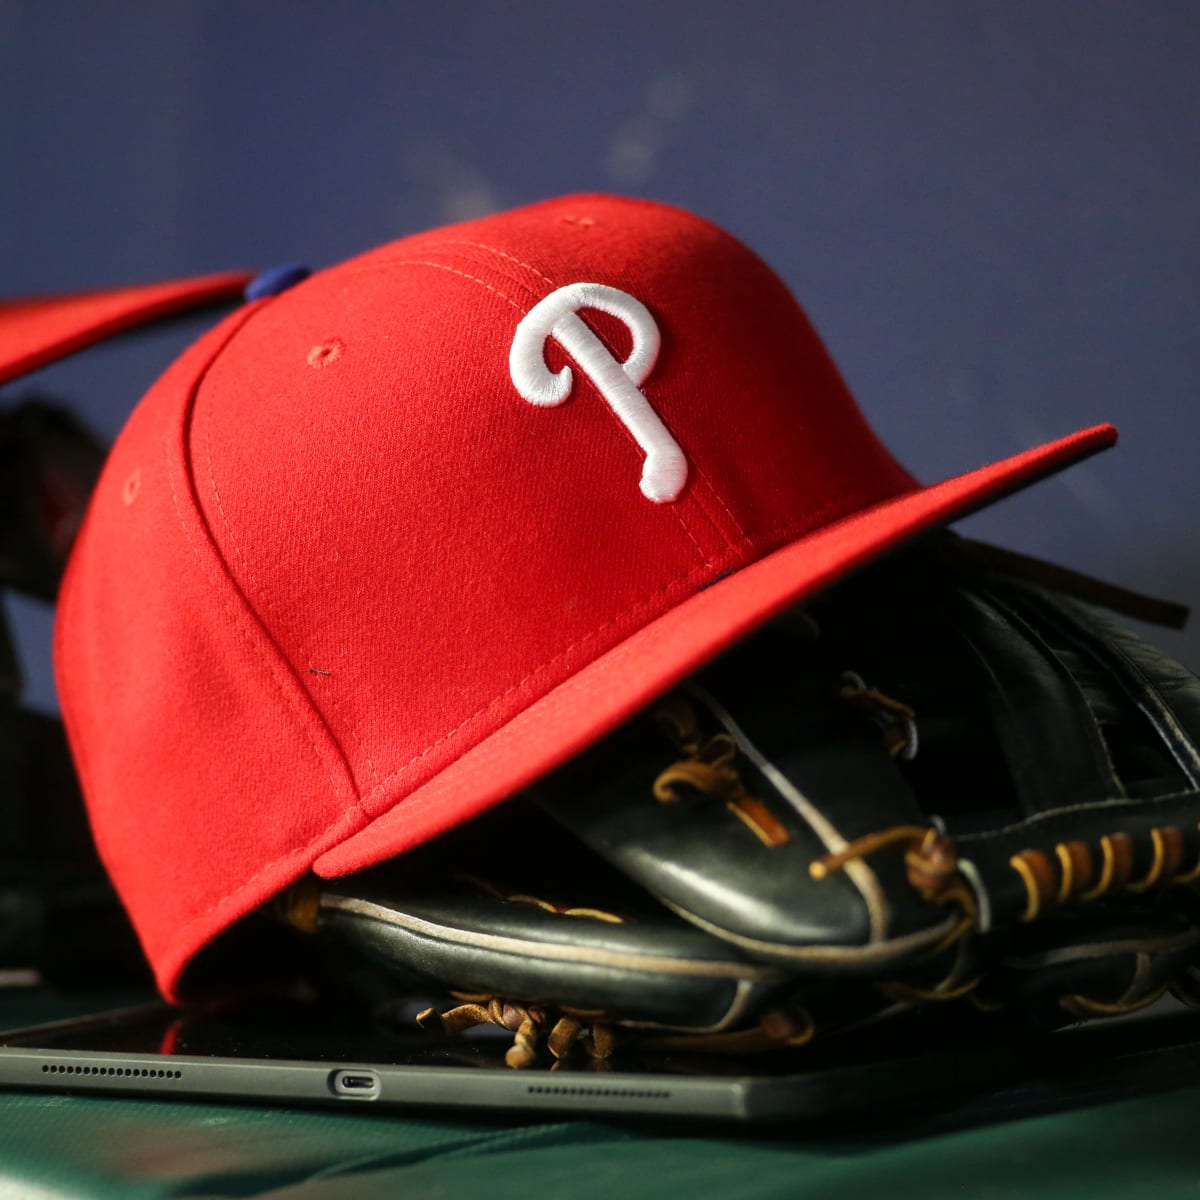 Philadelphia Phillies Hats, Phillies Gear, Philadelphia Phillies